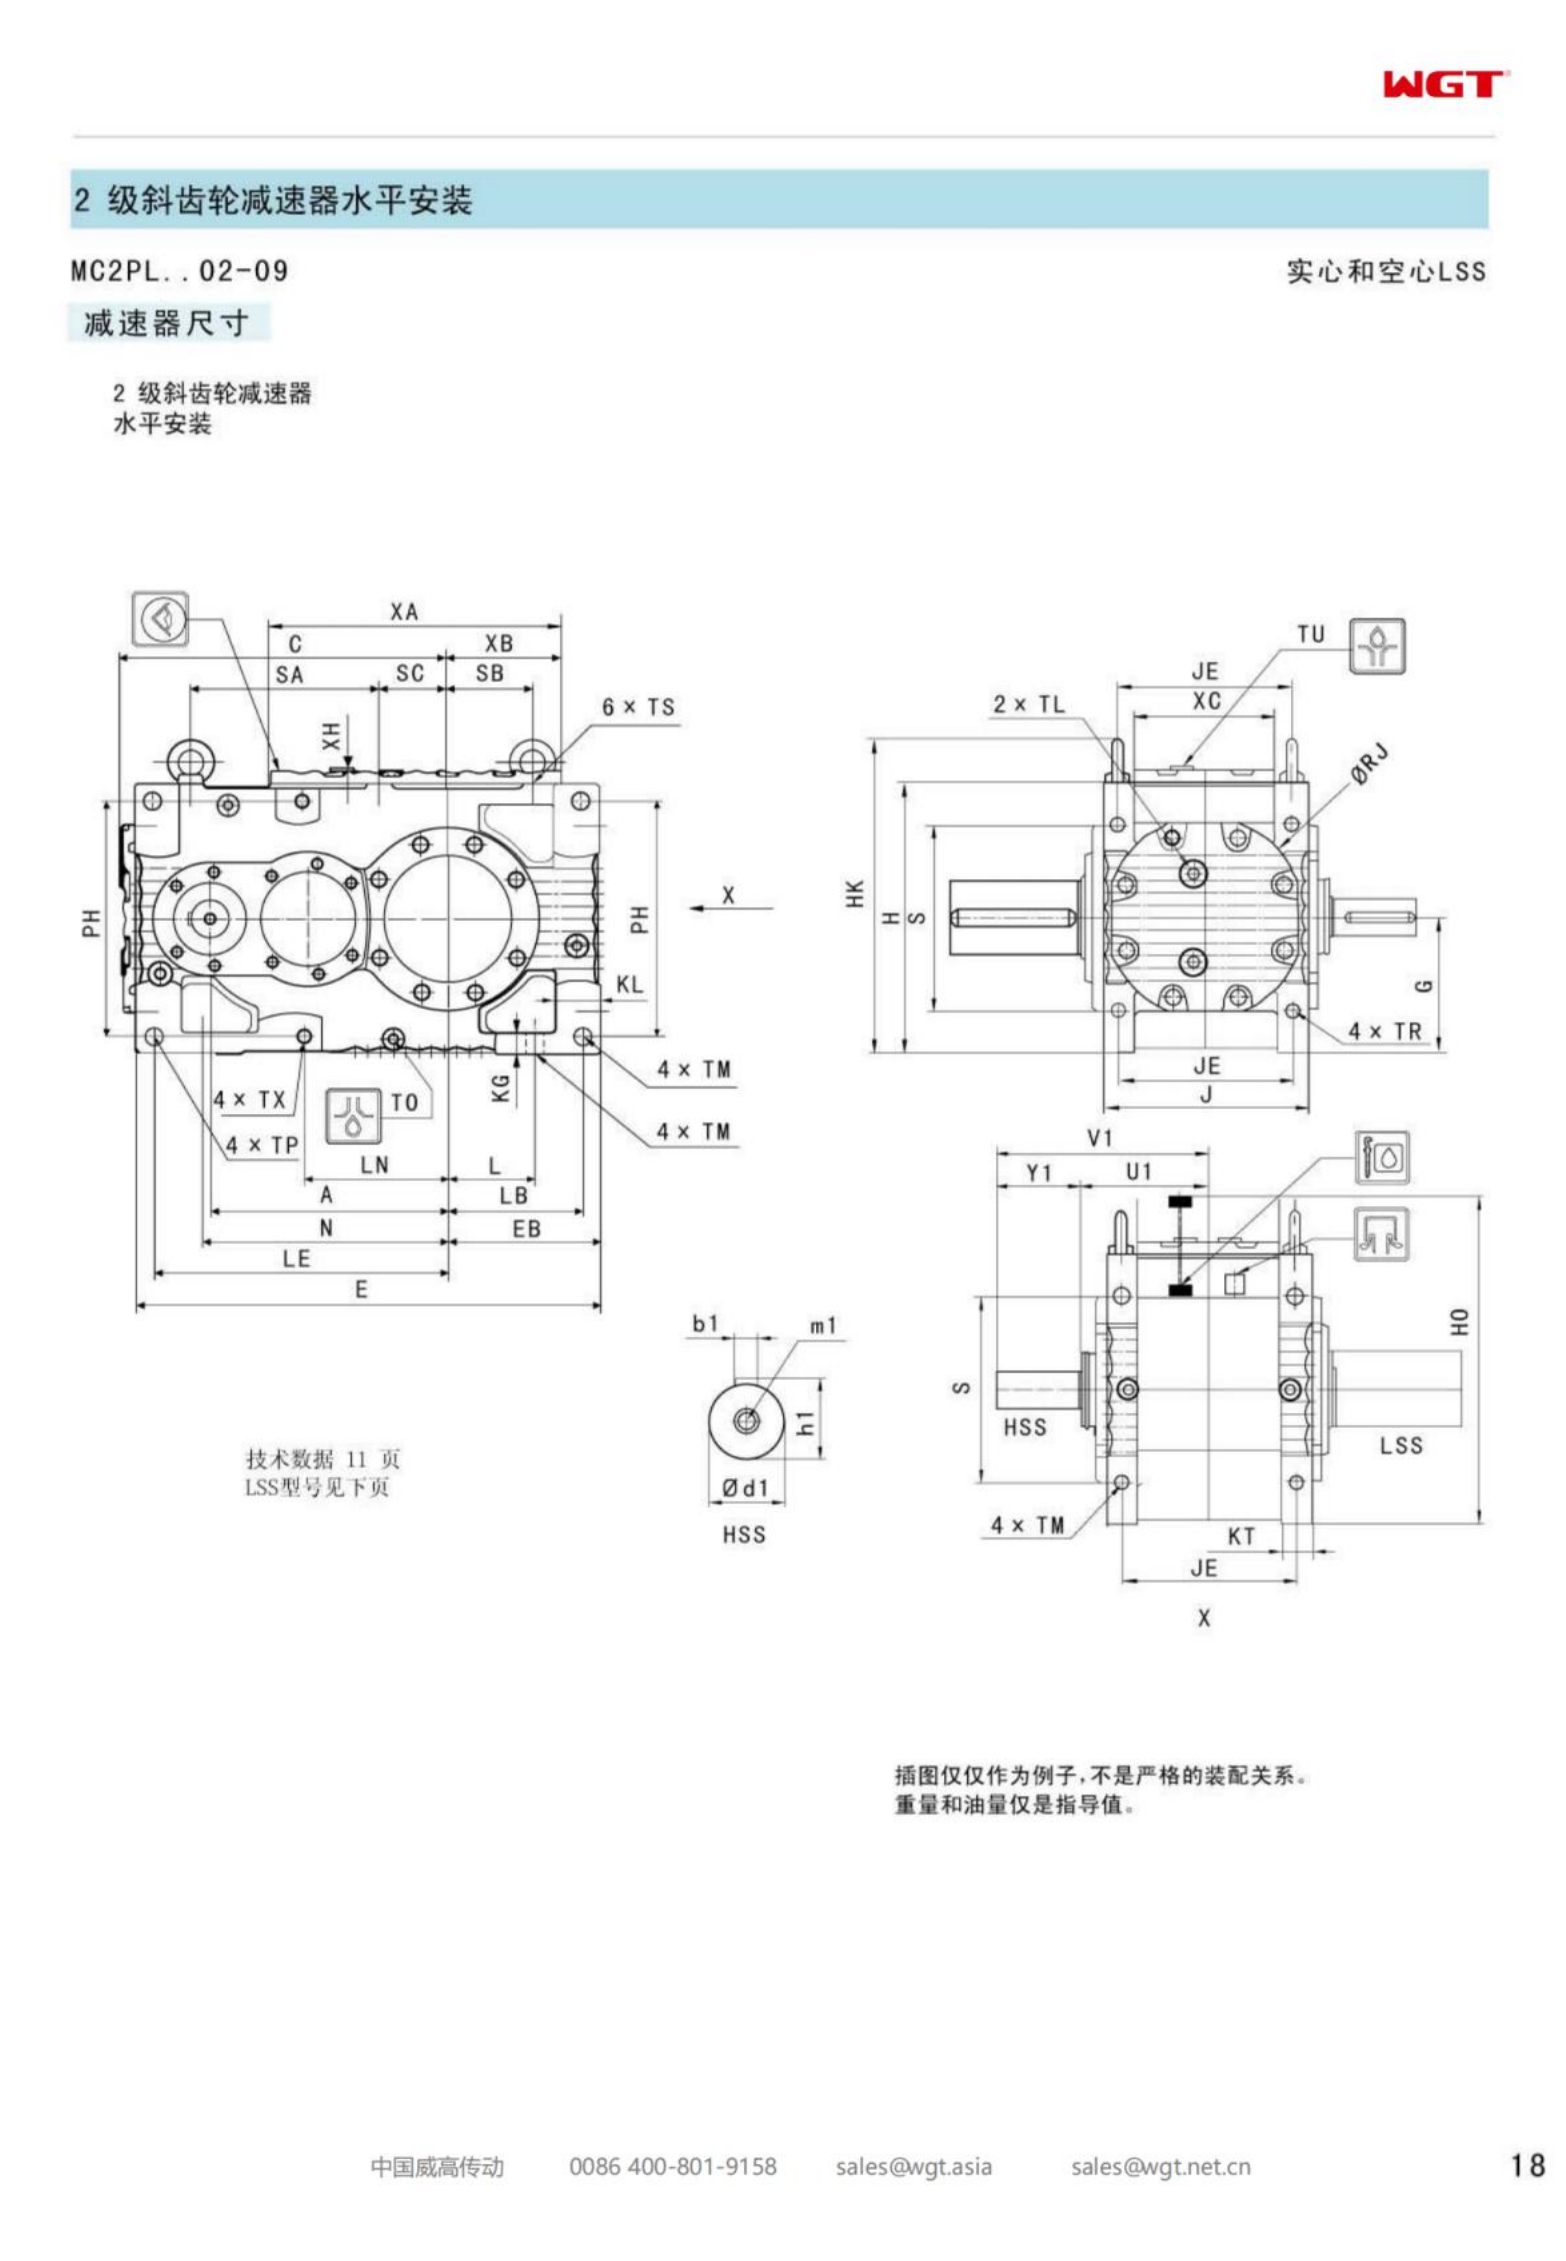 MC2PLHT08 replaces _SEW_MC_Series gearbox (patent)